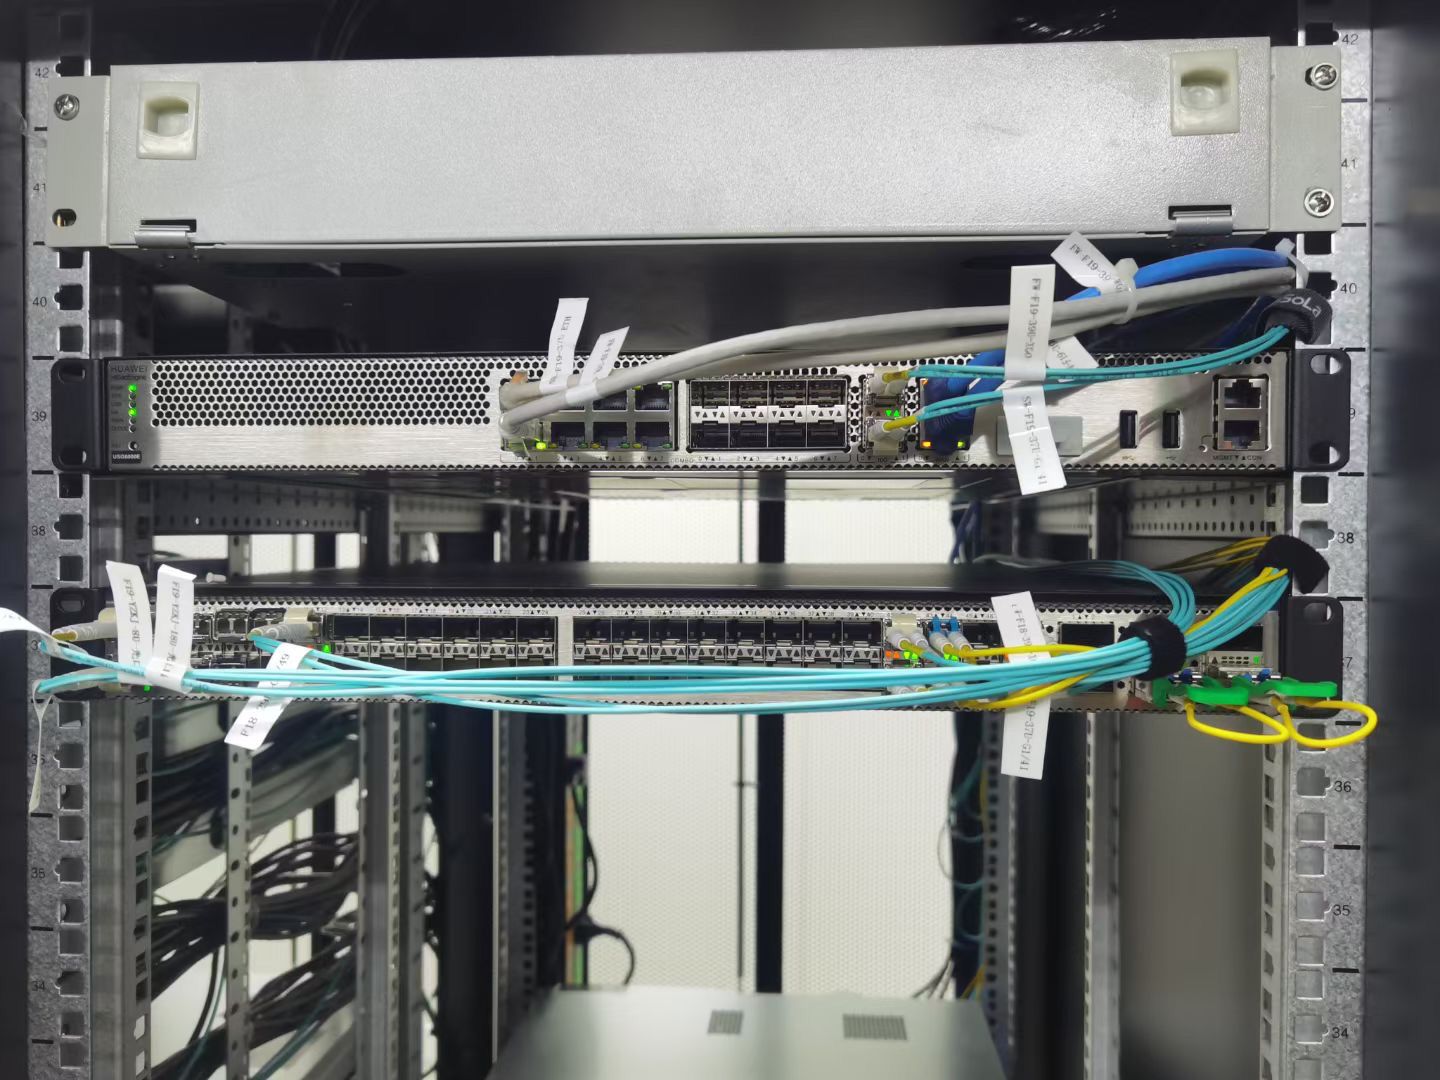 SFP+10G SM1310 Dual fiber 10KM LC Transceiver Module Compatible with Huawei Cisco etc Switch